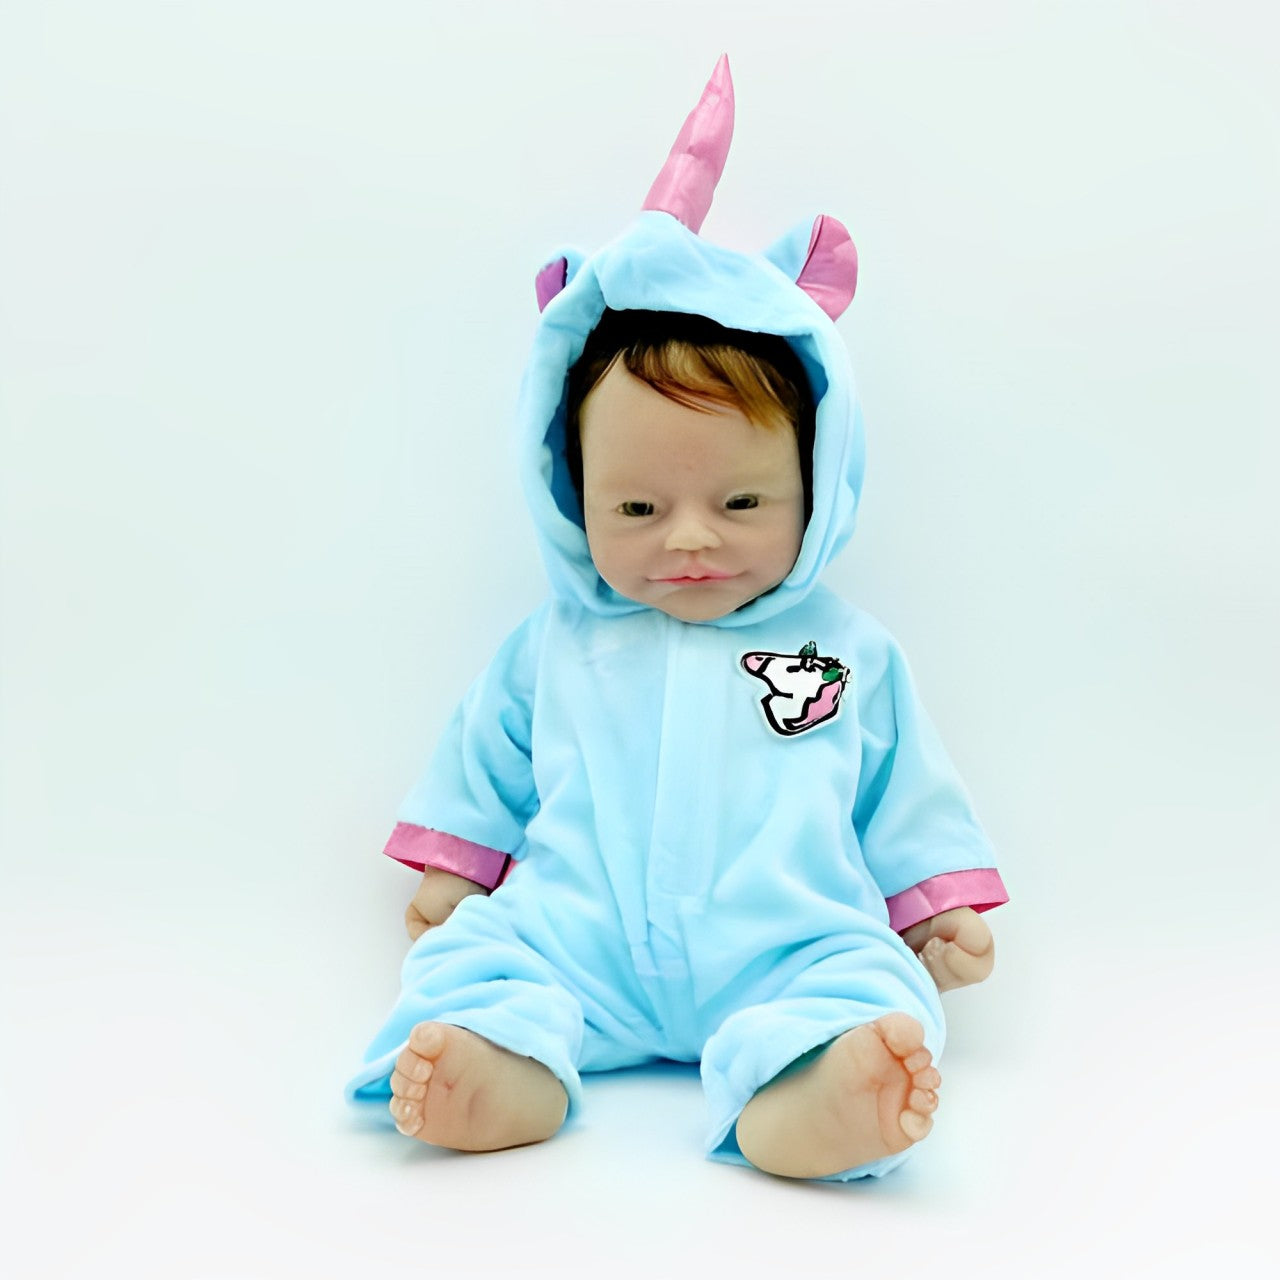 Unicorn pajamas for dolls